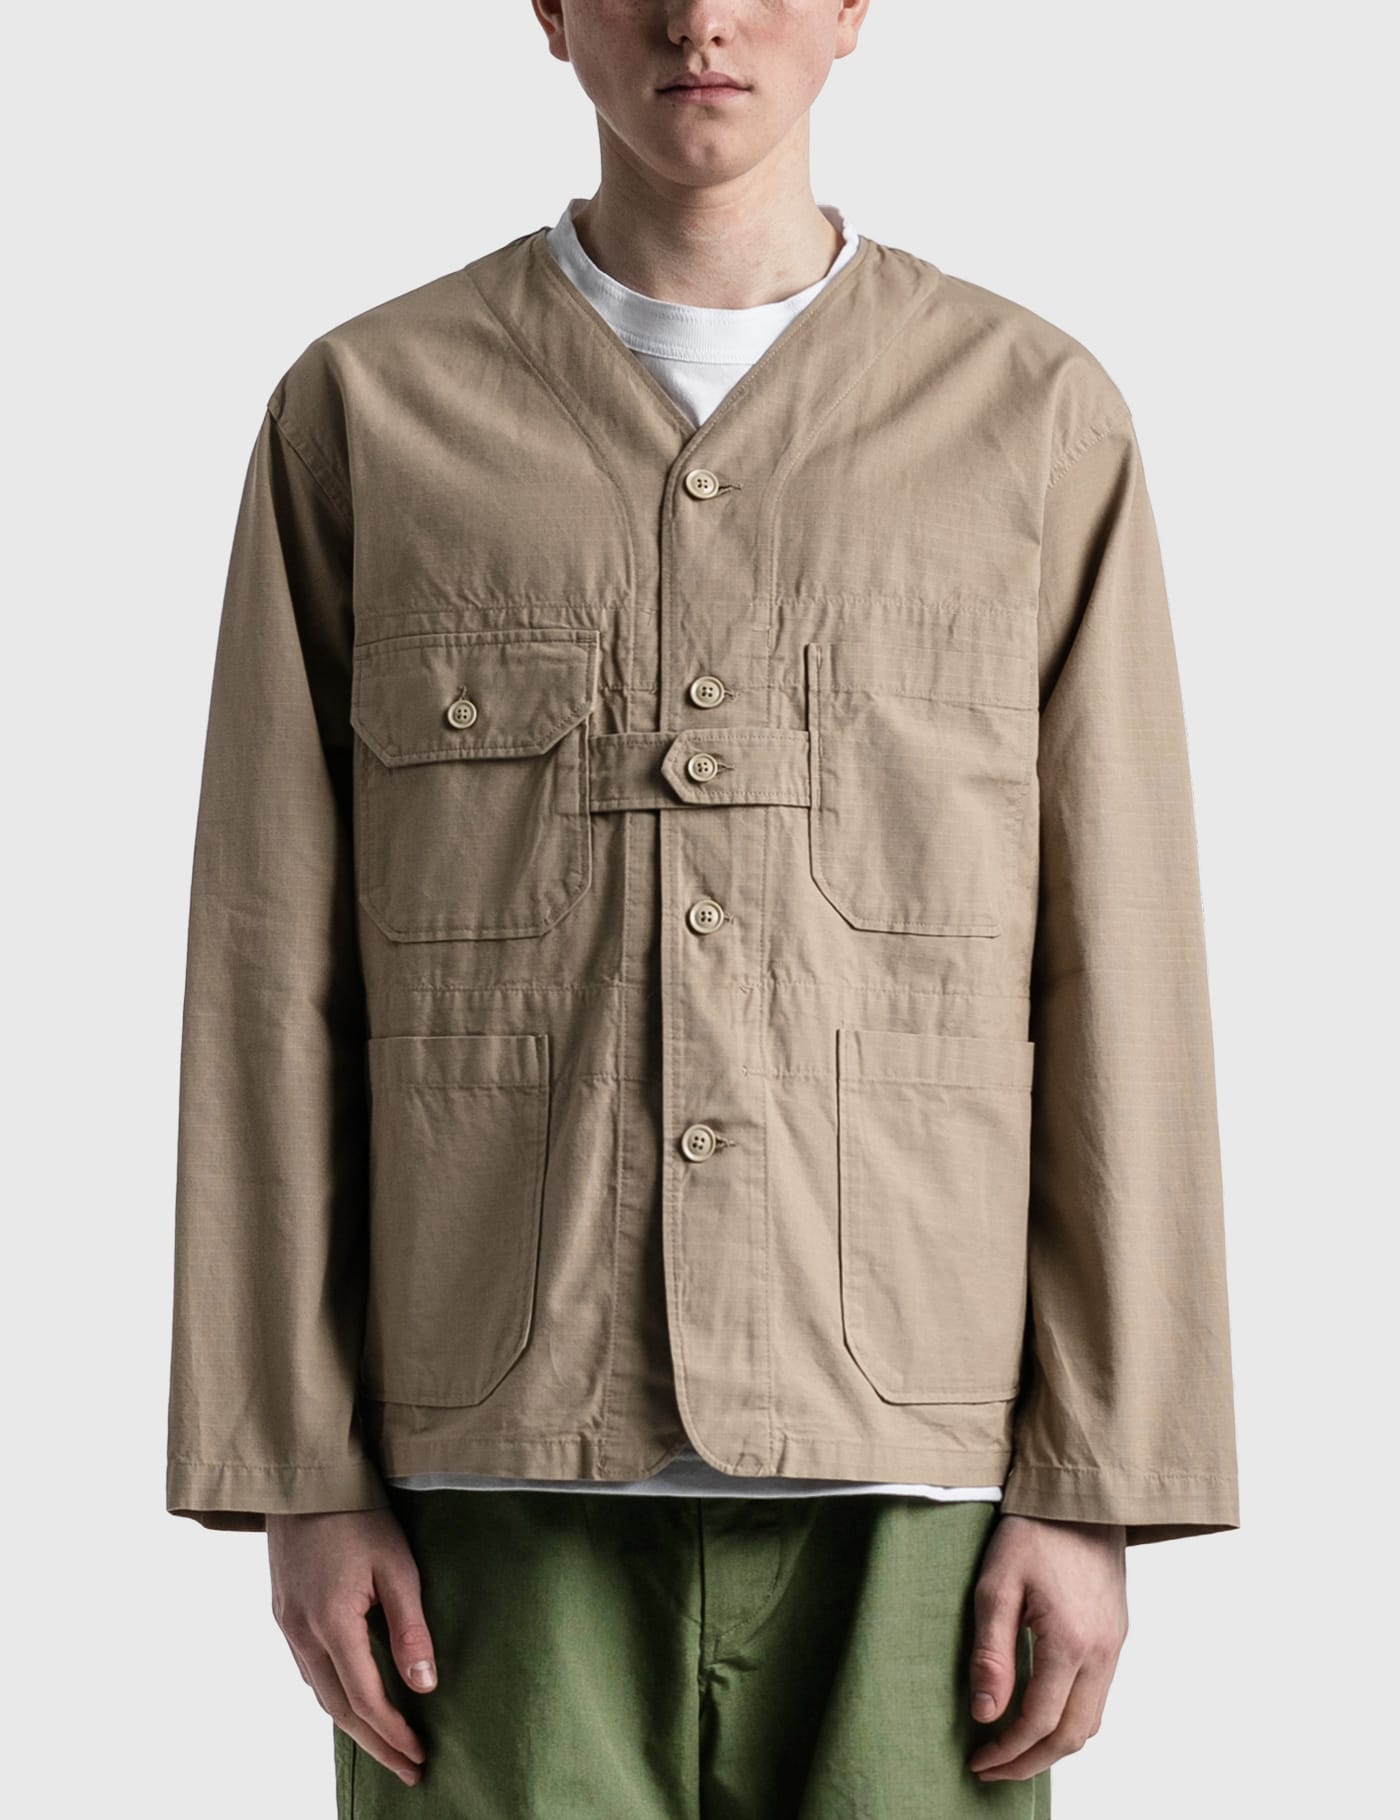 Engineered Garments - Cardigan Jacket | HBX - Globally Curated